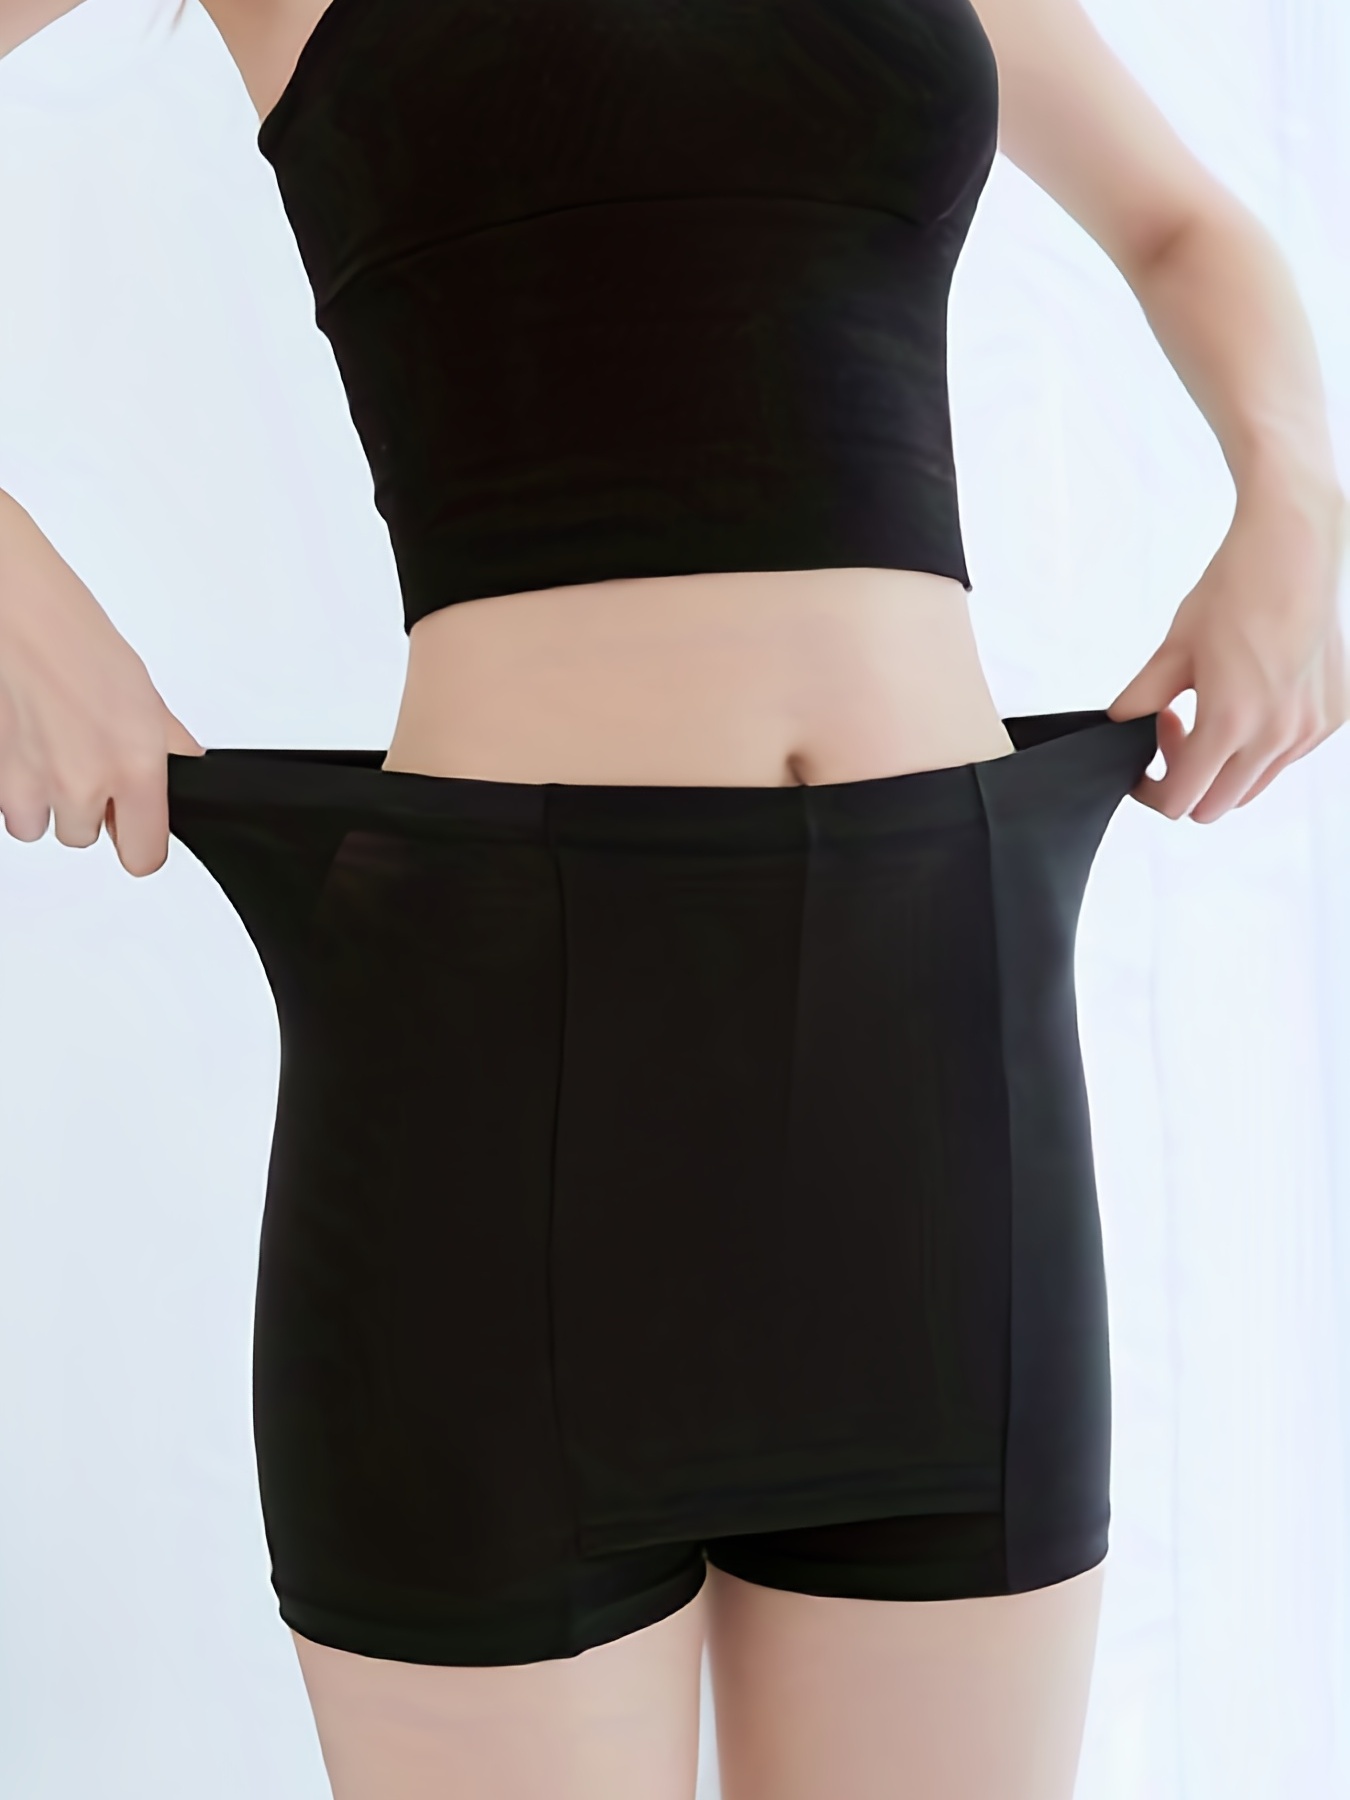 Women Safety Shorts Pants Seamless Panties Shorts Under Skirt